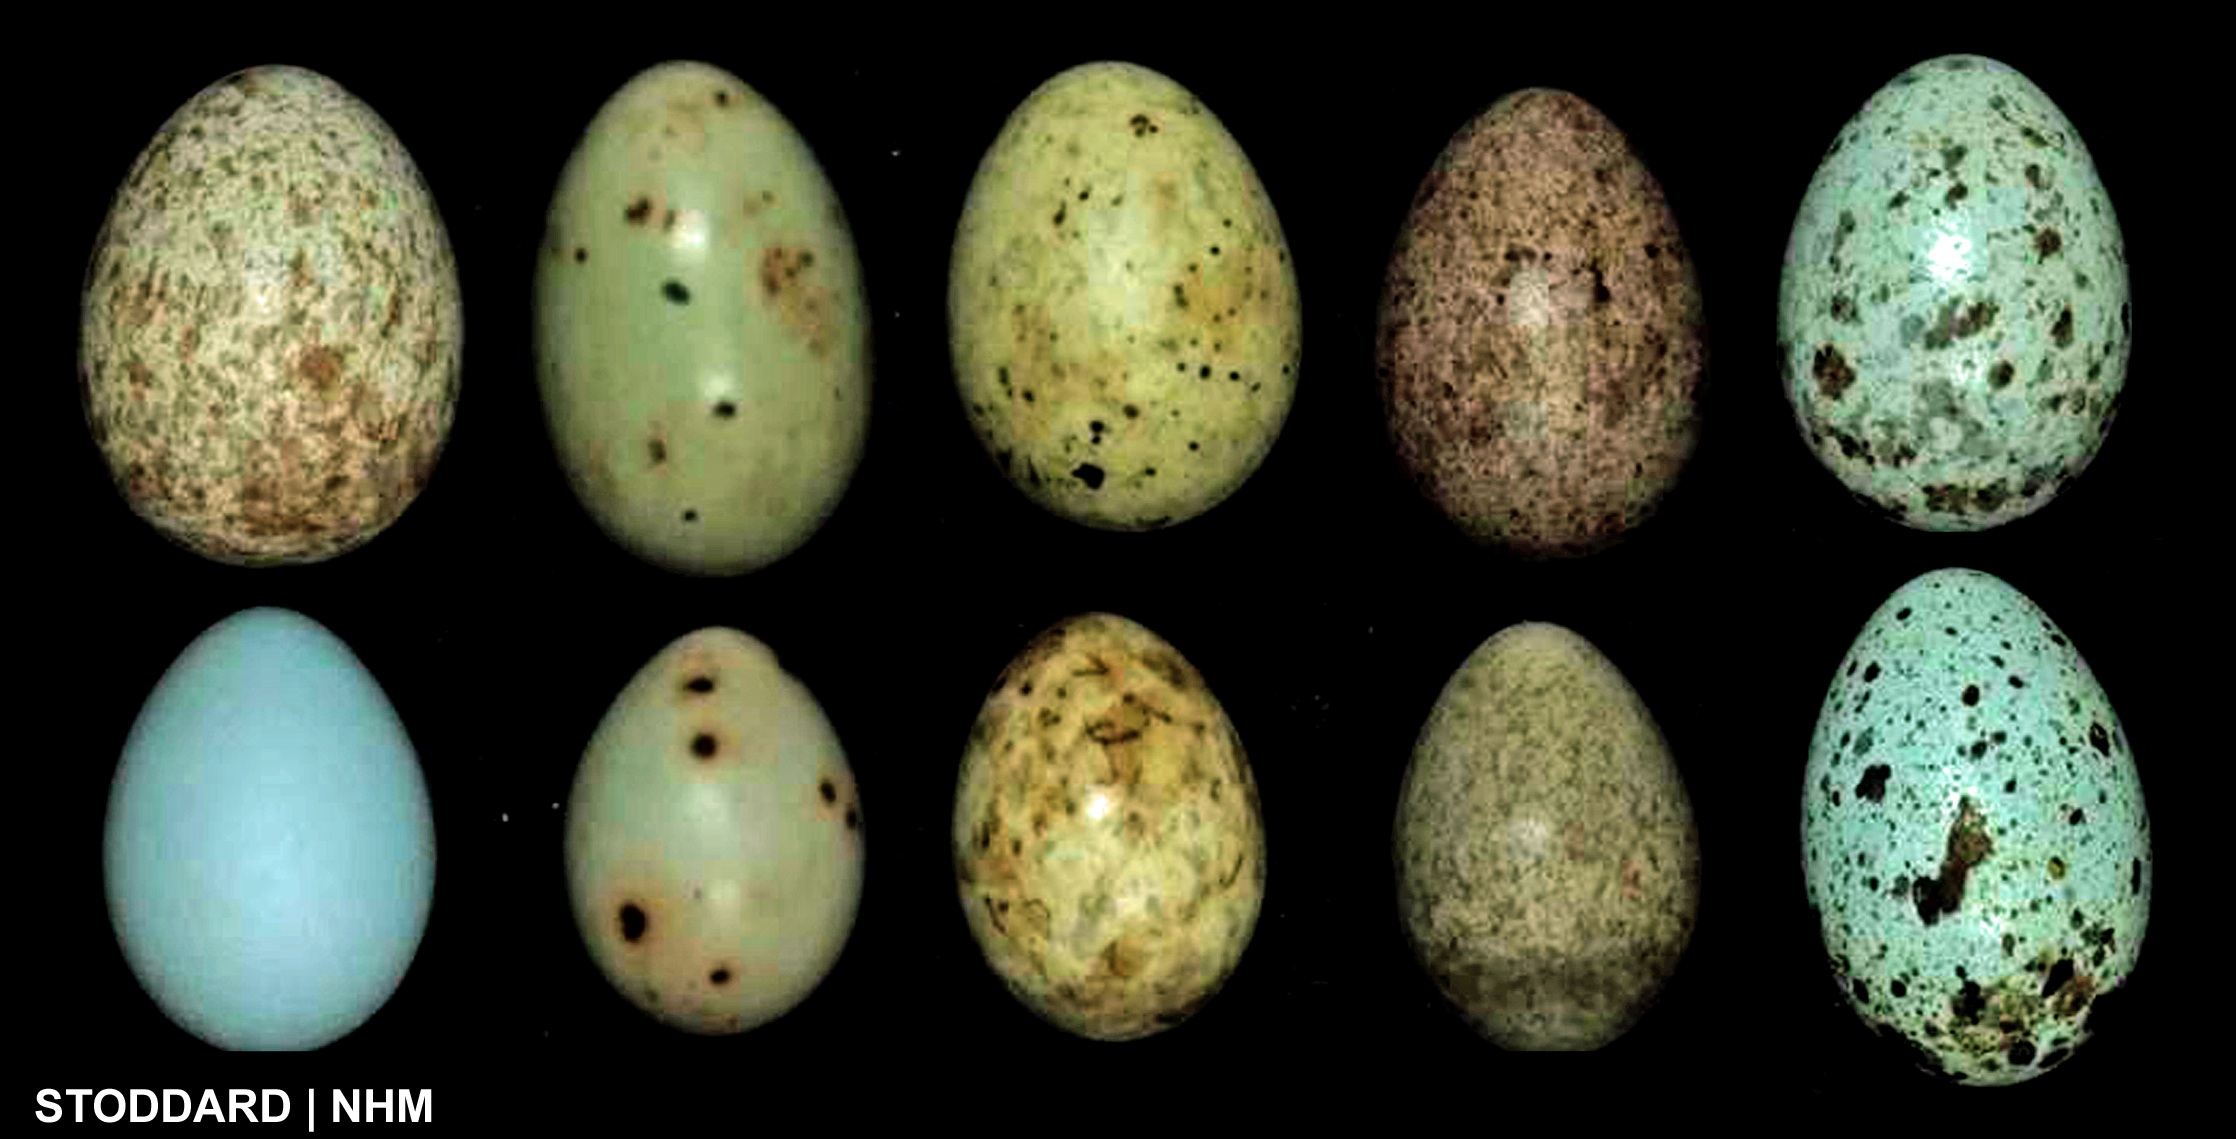 Яйца птиц покрыты